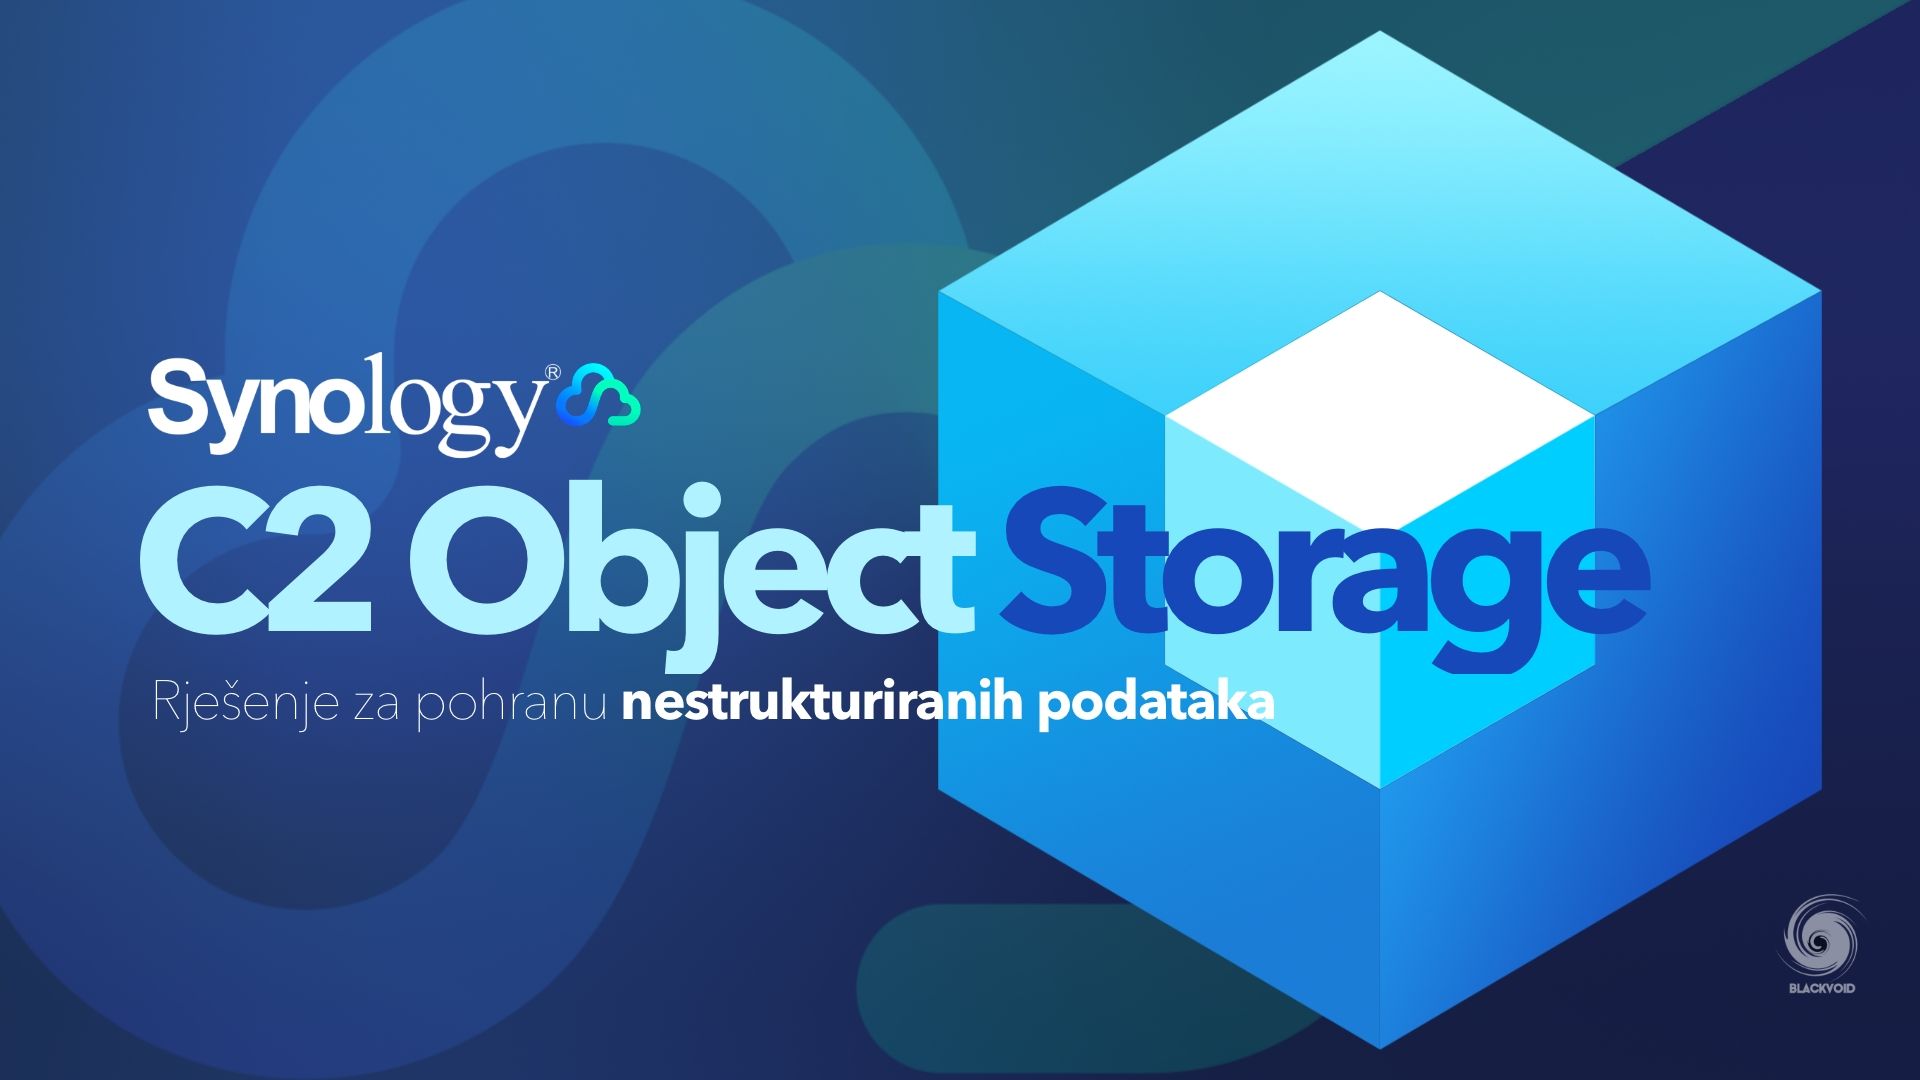 Synology C2 Object Storage